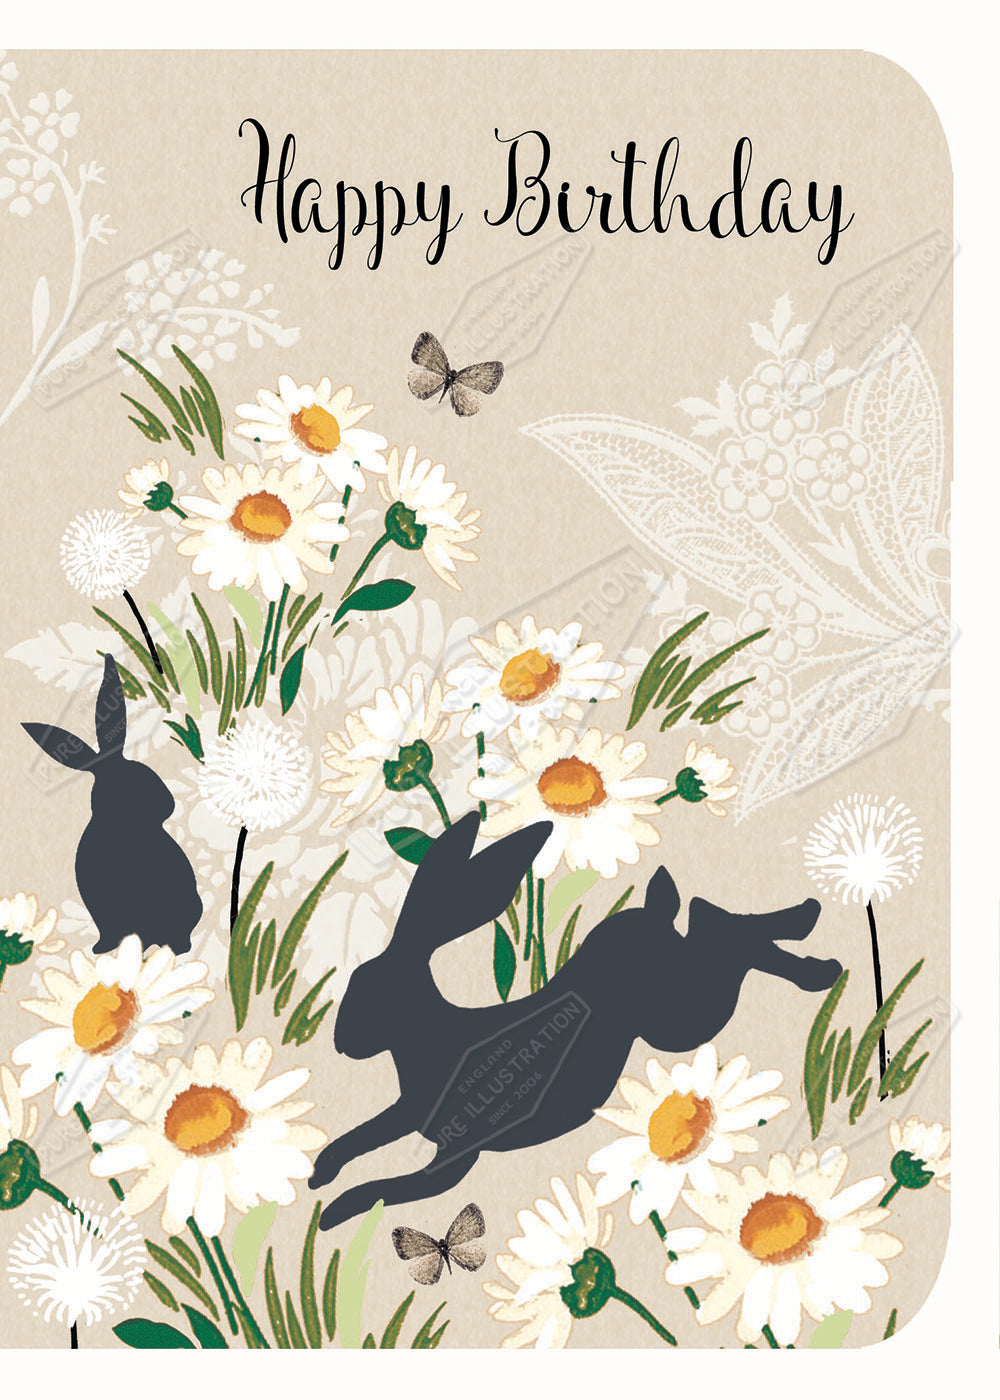 00029742DEV - Deva Evans is represented by Pure Art Licensing Agency - Birthday Greeting Card Design